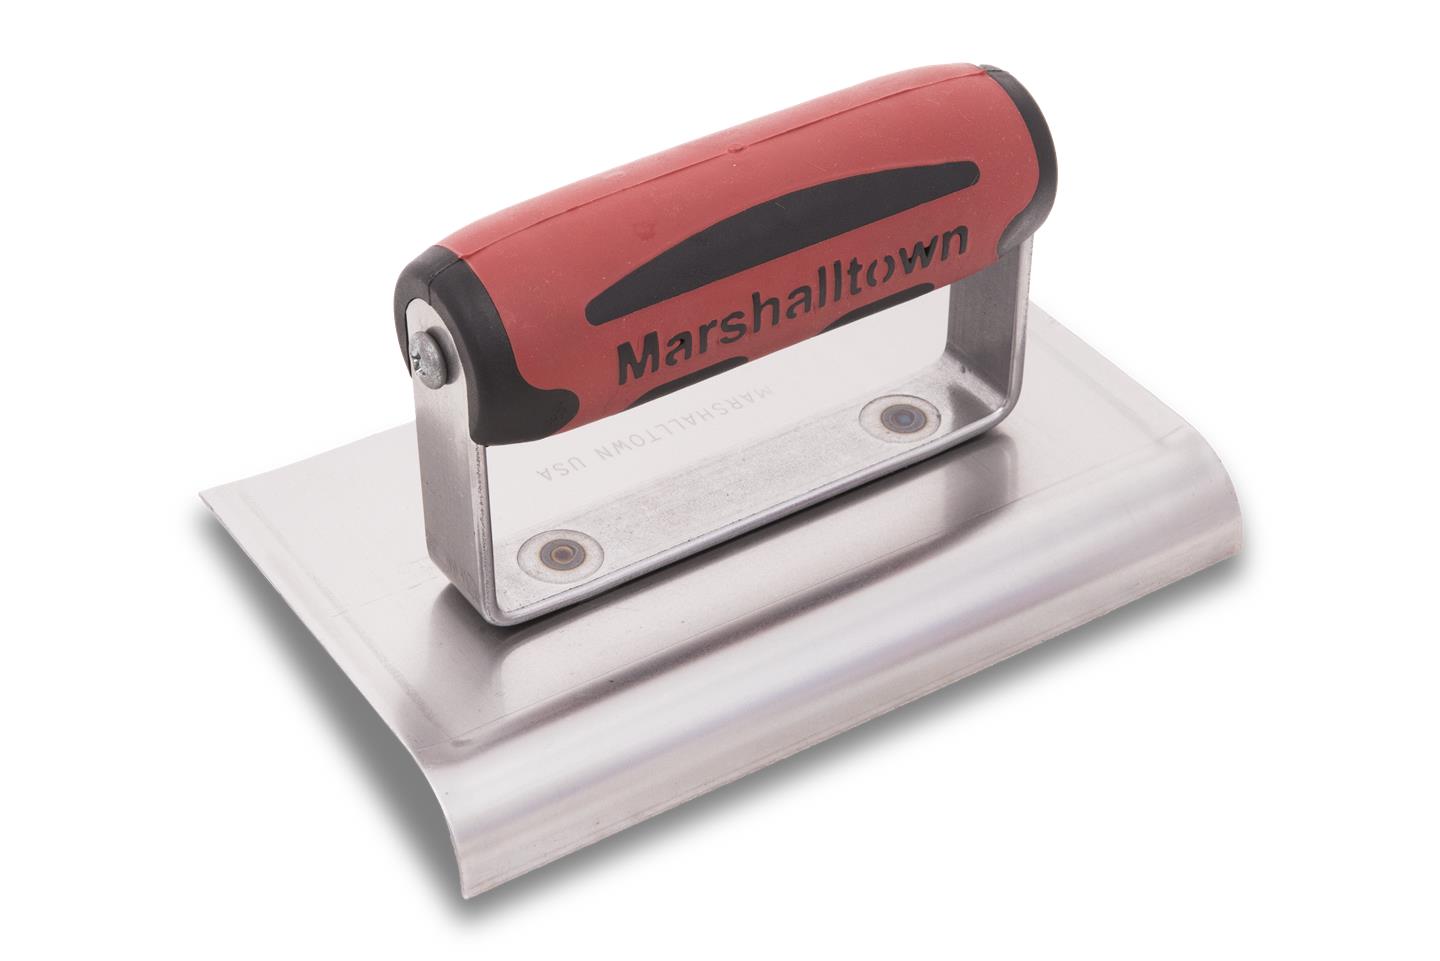 Marshalltown (14149) product